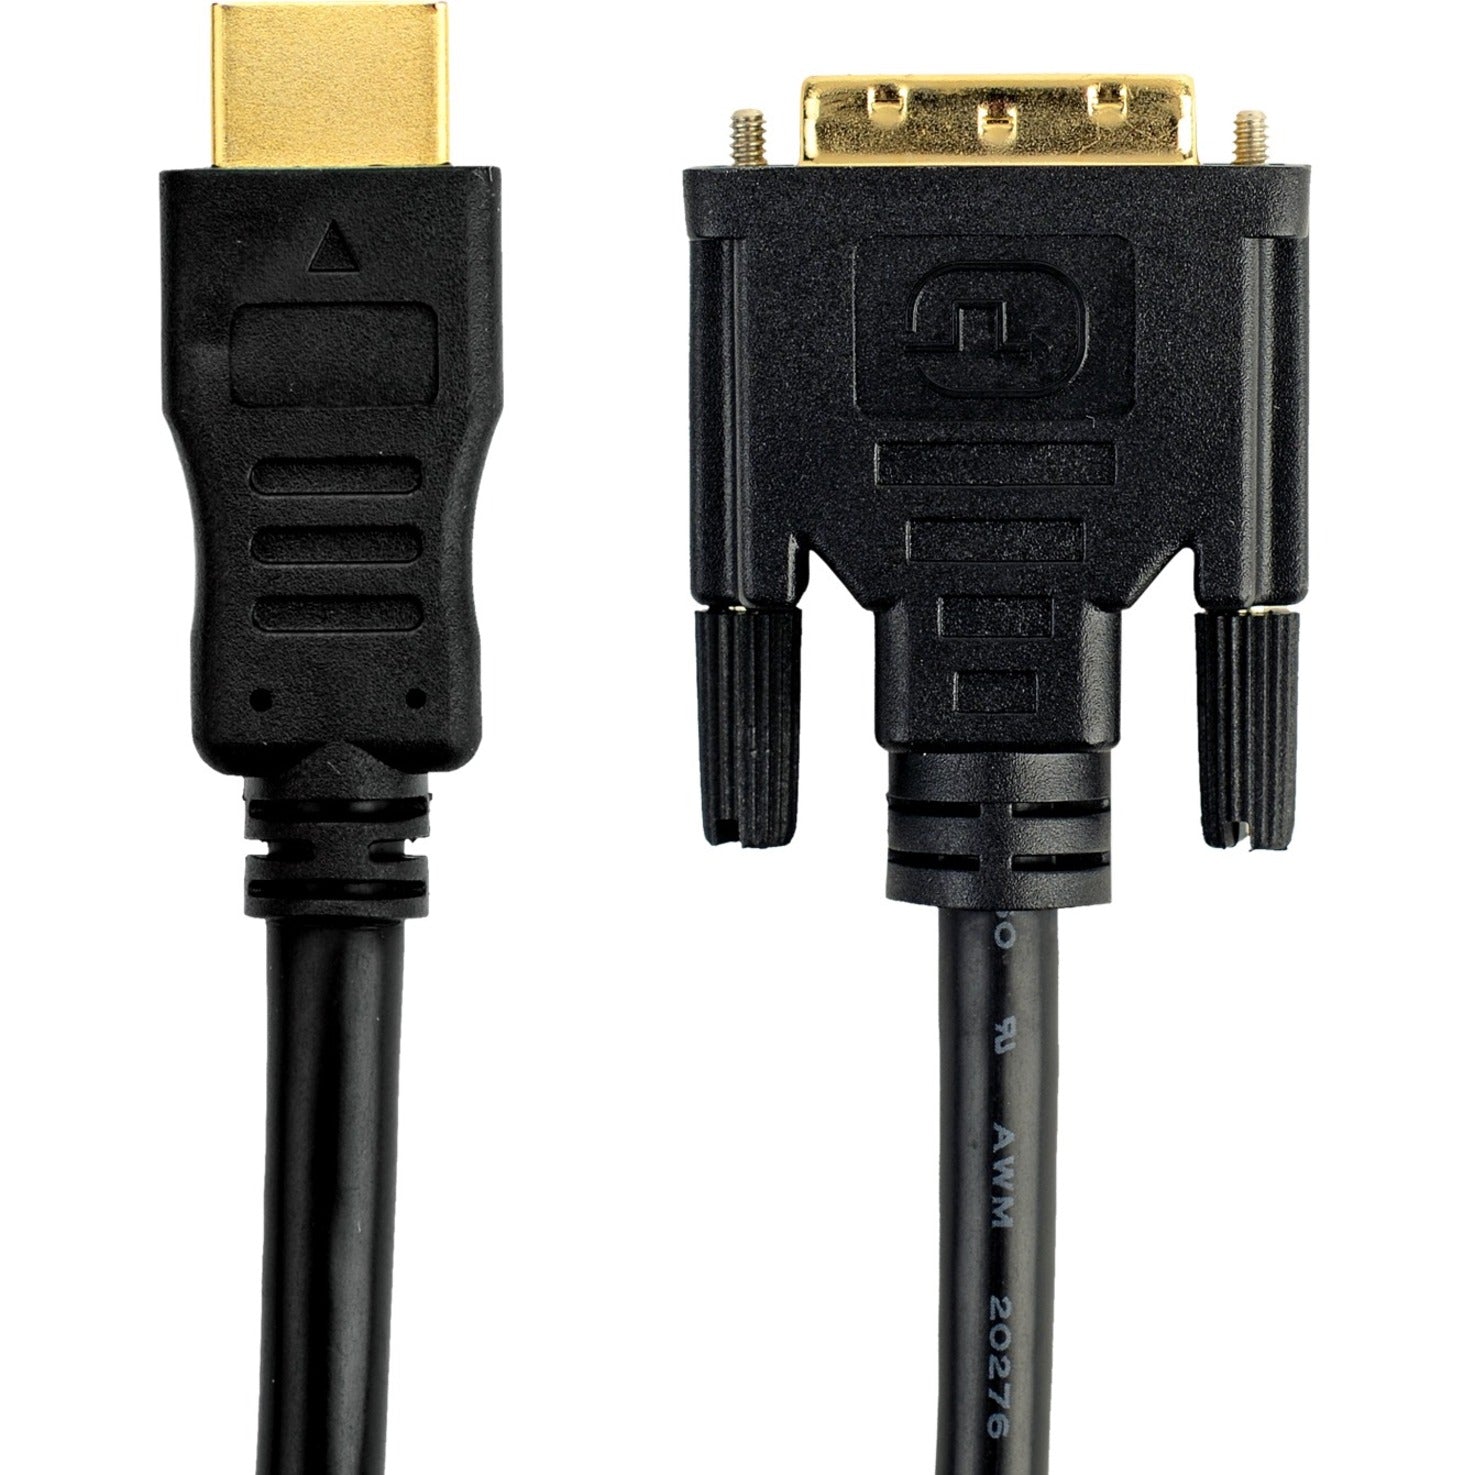 Belkin F2E8242b03 HDMI to DVI Cable, 3 ft, Lifetime Warranty, Replaces F2E8171-series